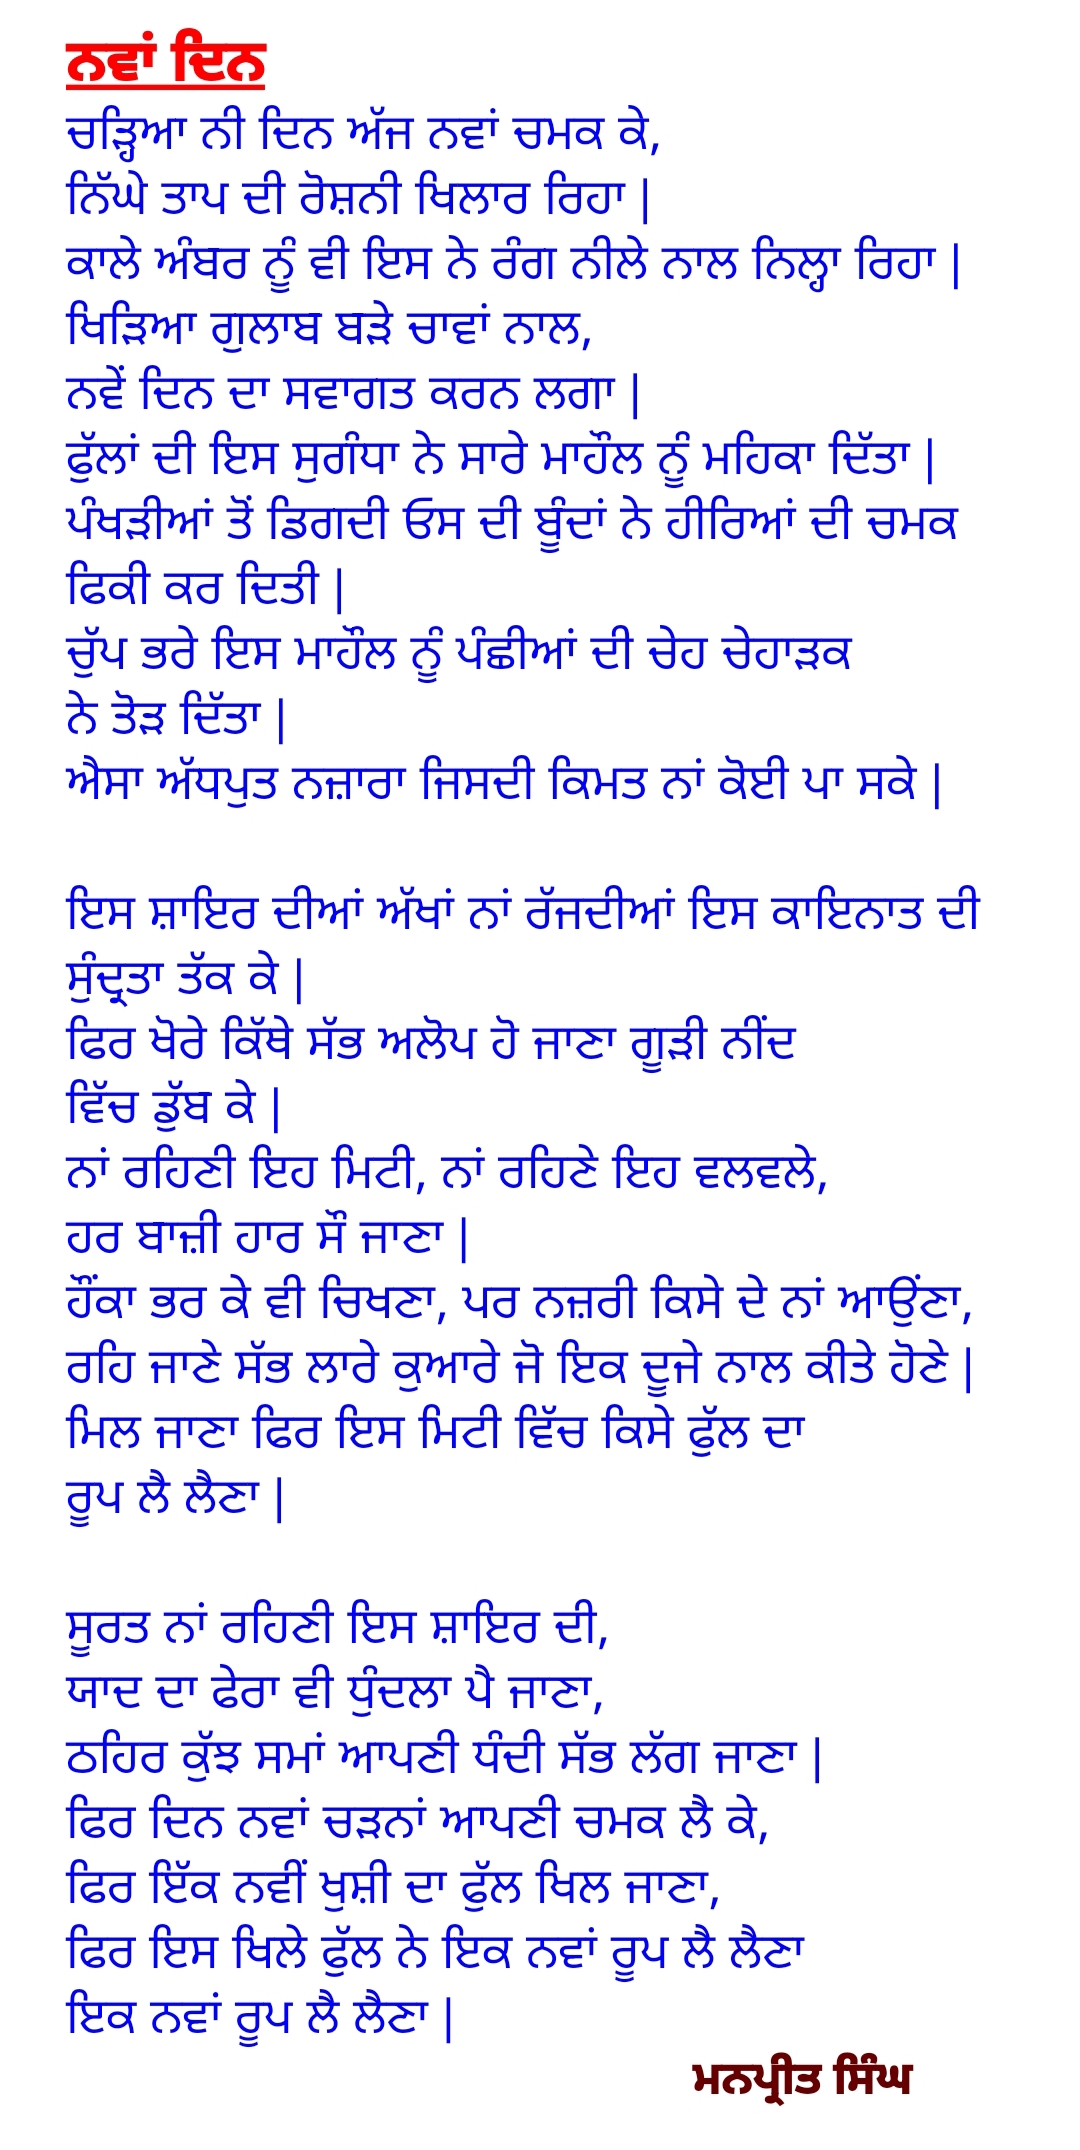 Punjabi Shayari Images | Best shayari and status pictures in Punjabi lyrics